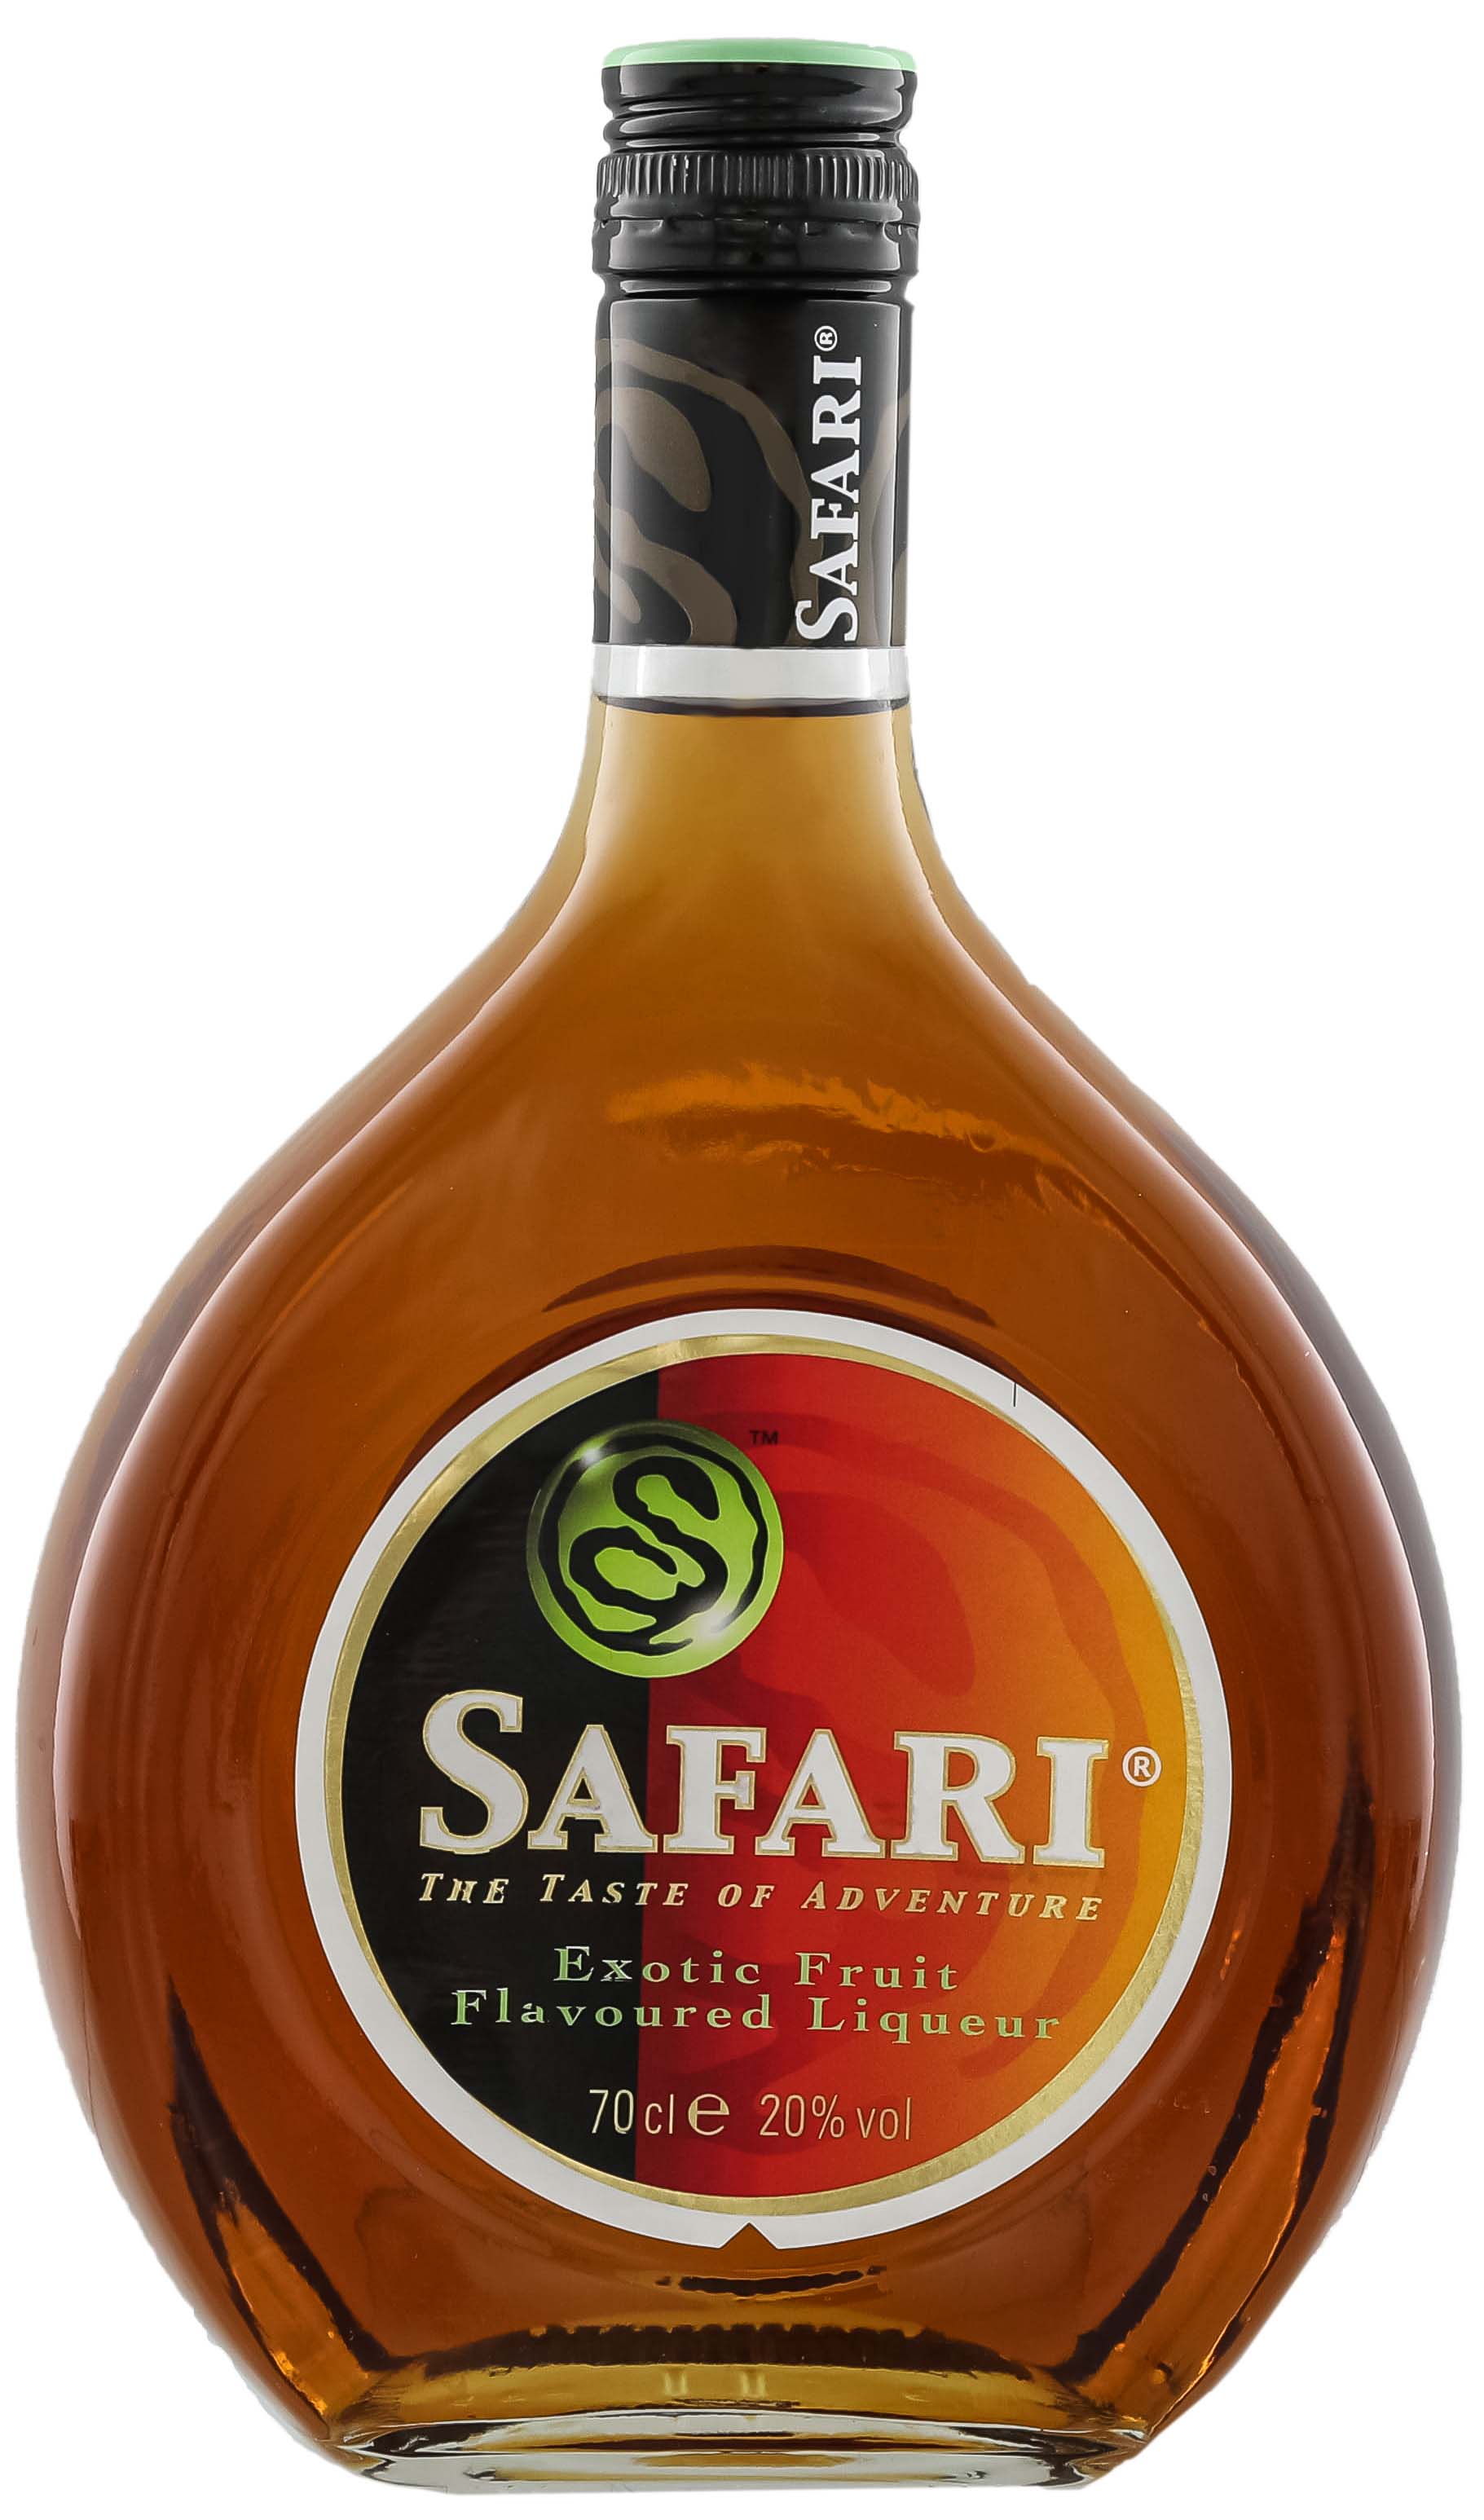 Safari Exotic Fruit Liqueur 0,7L jetzt kaufen im Drinkology Online shop!